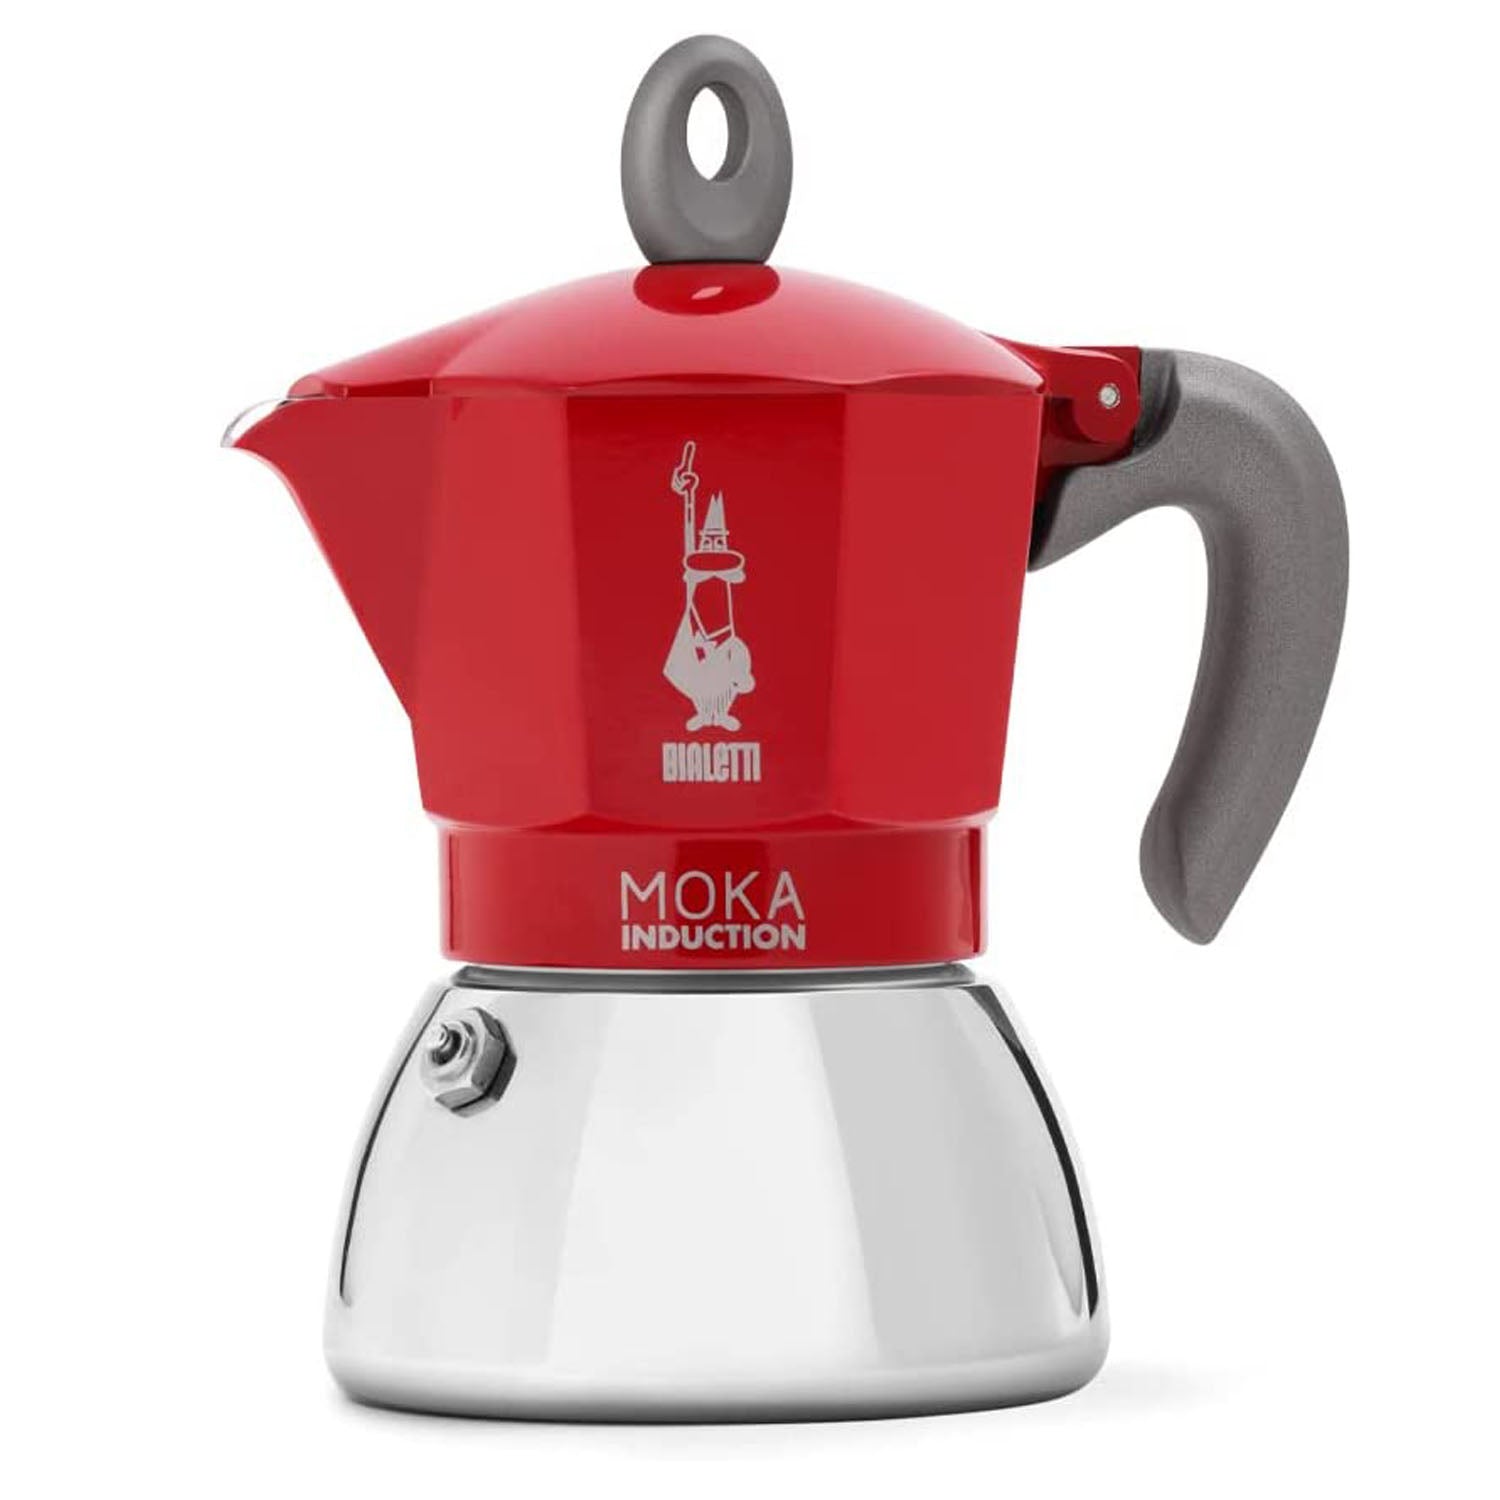 Bialetti Red Moka Express 6-Cup Espresso Maker